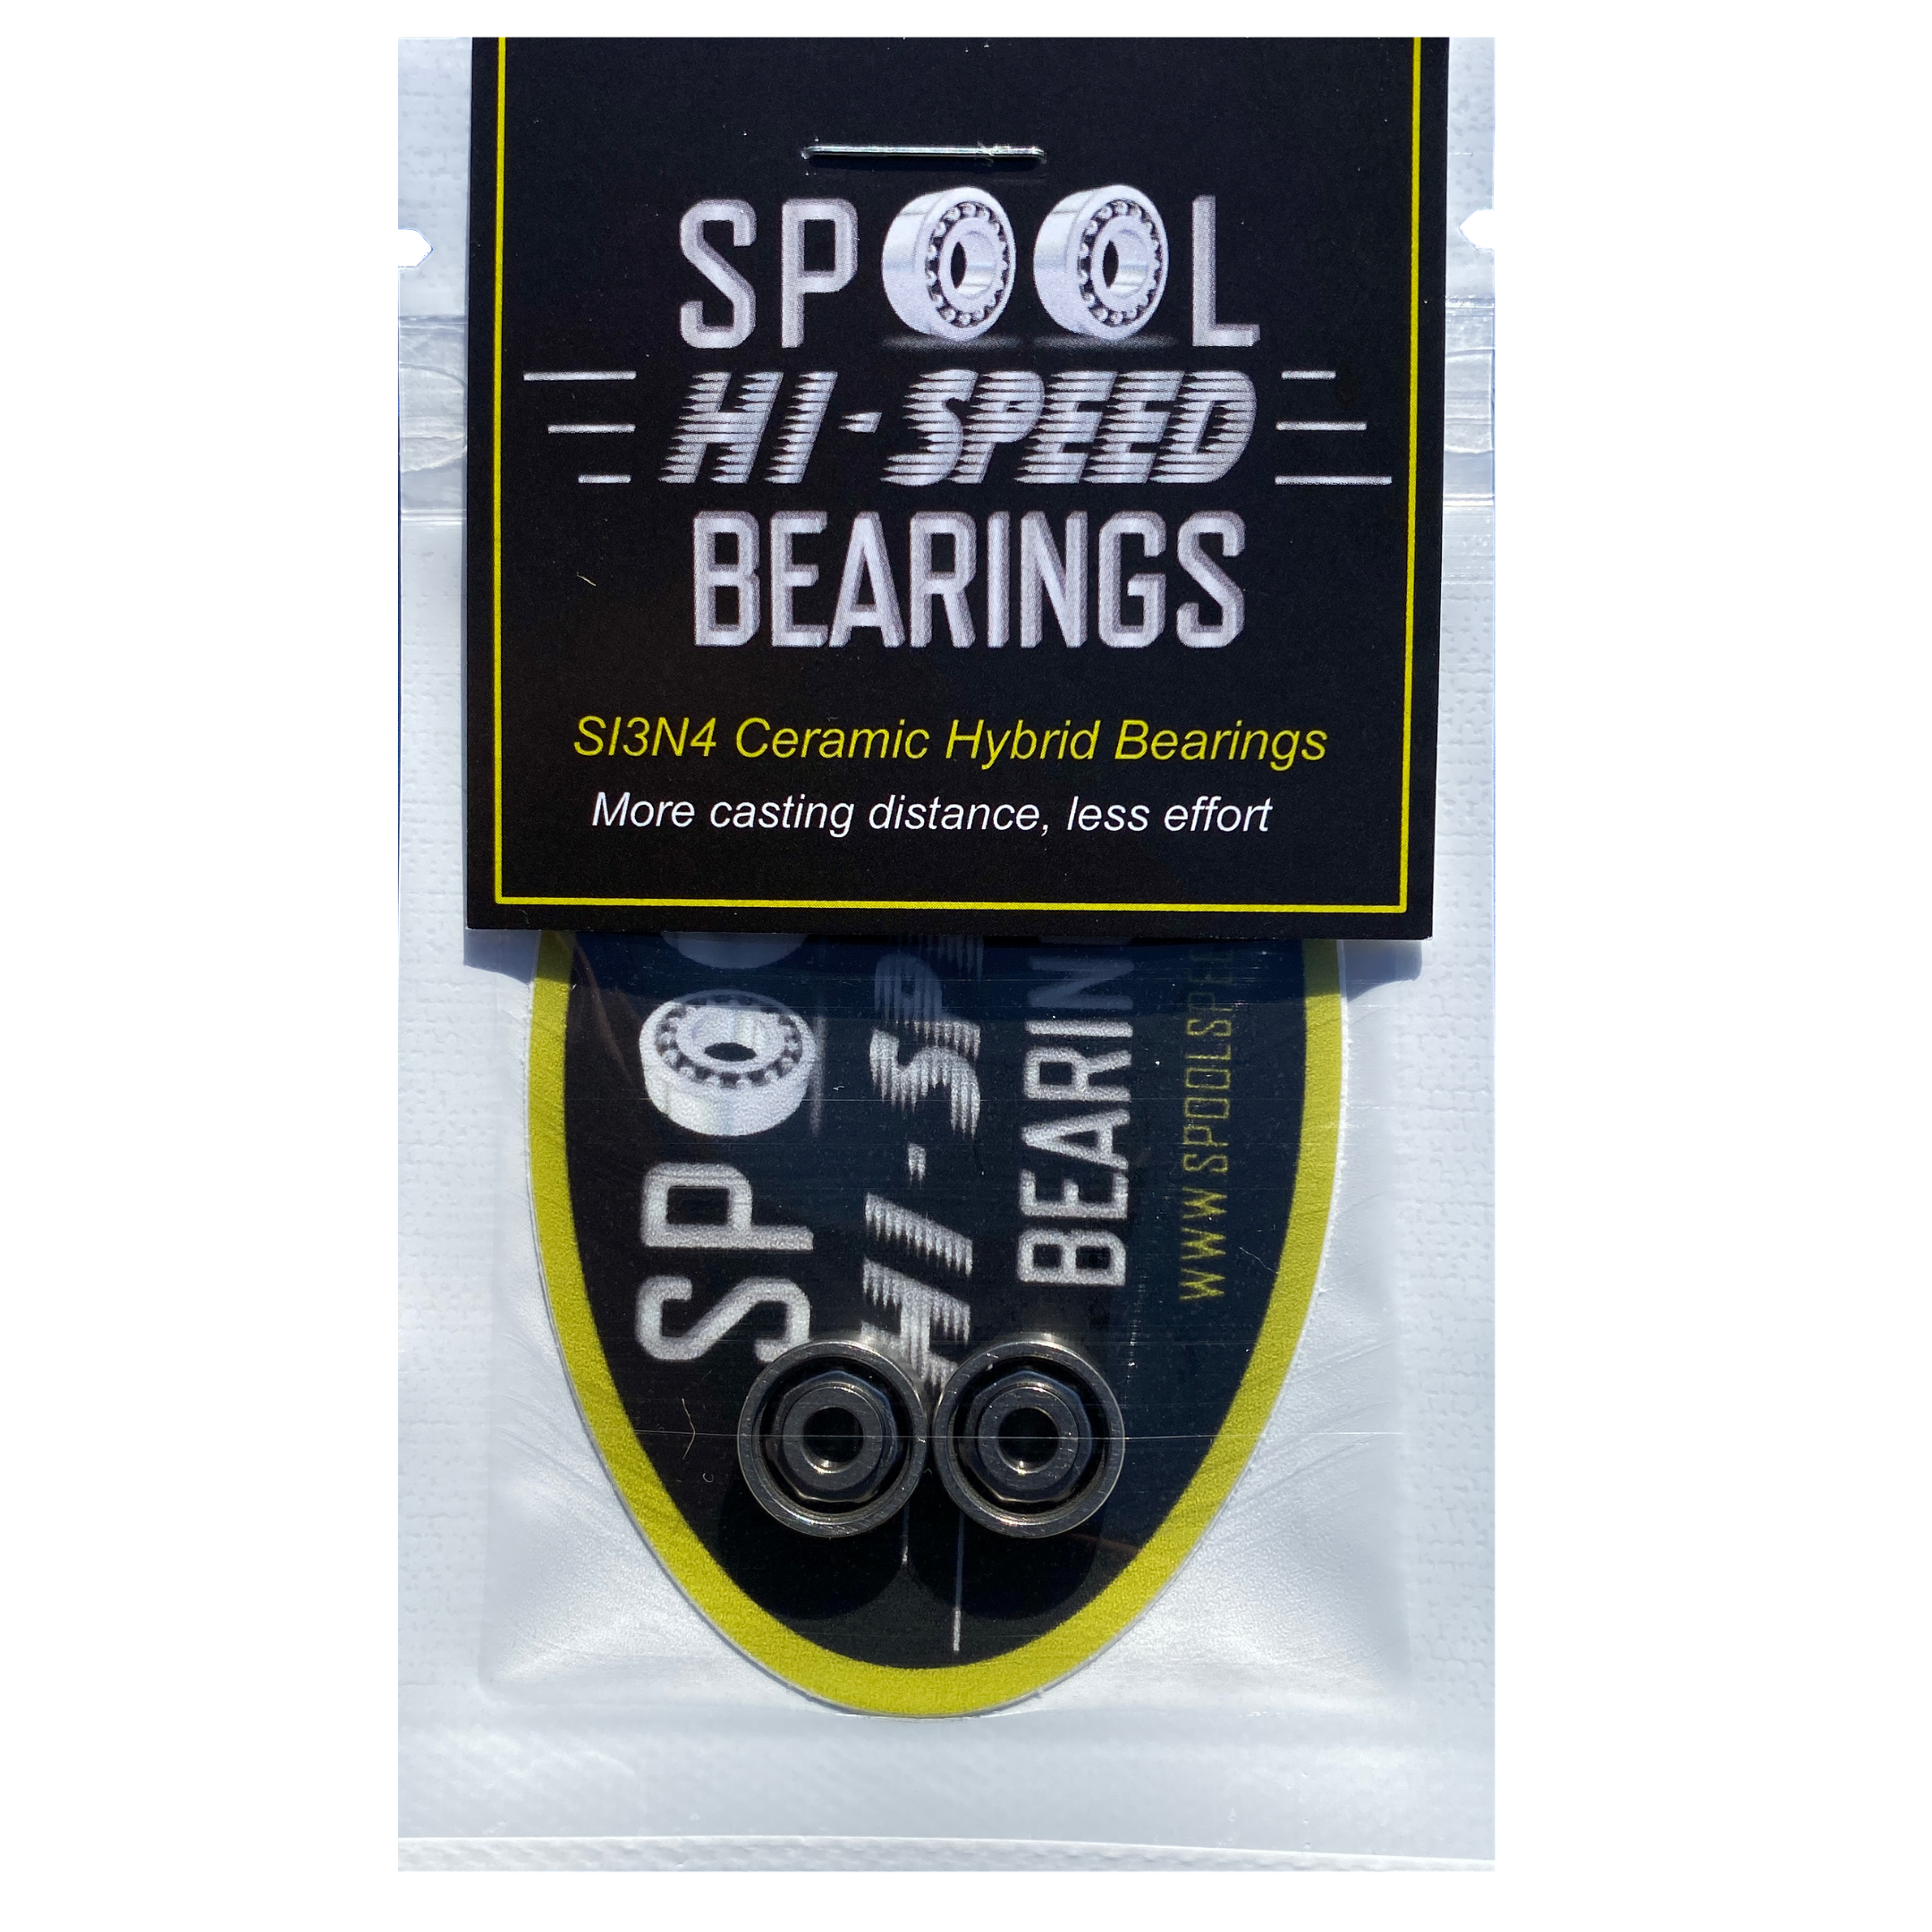 13 Fishing – Spool Hi-Speed Bearings